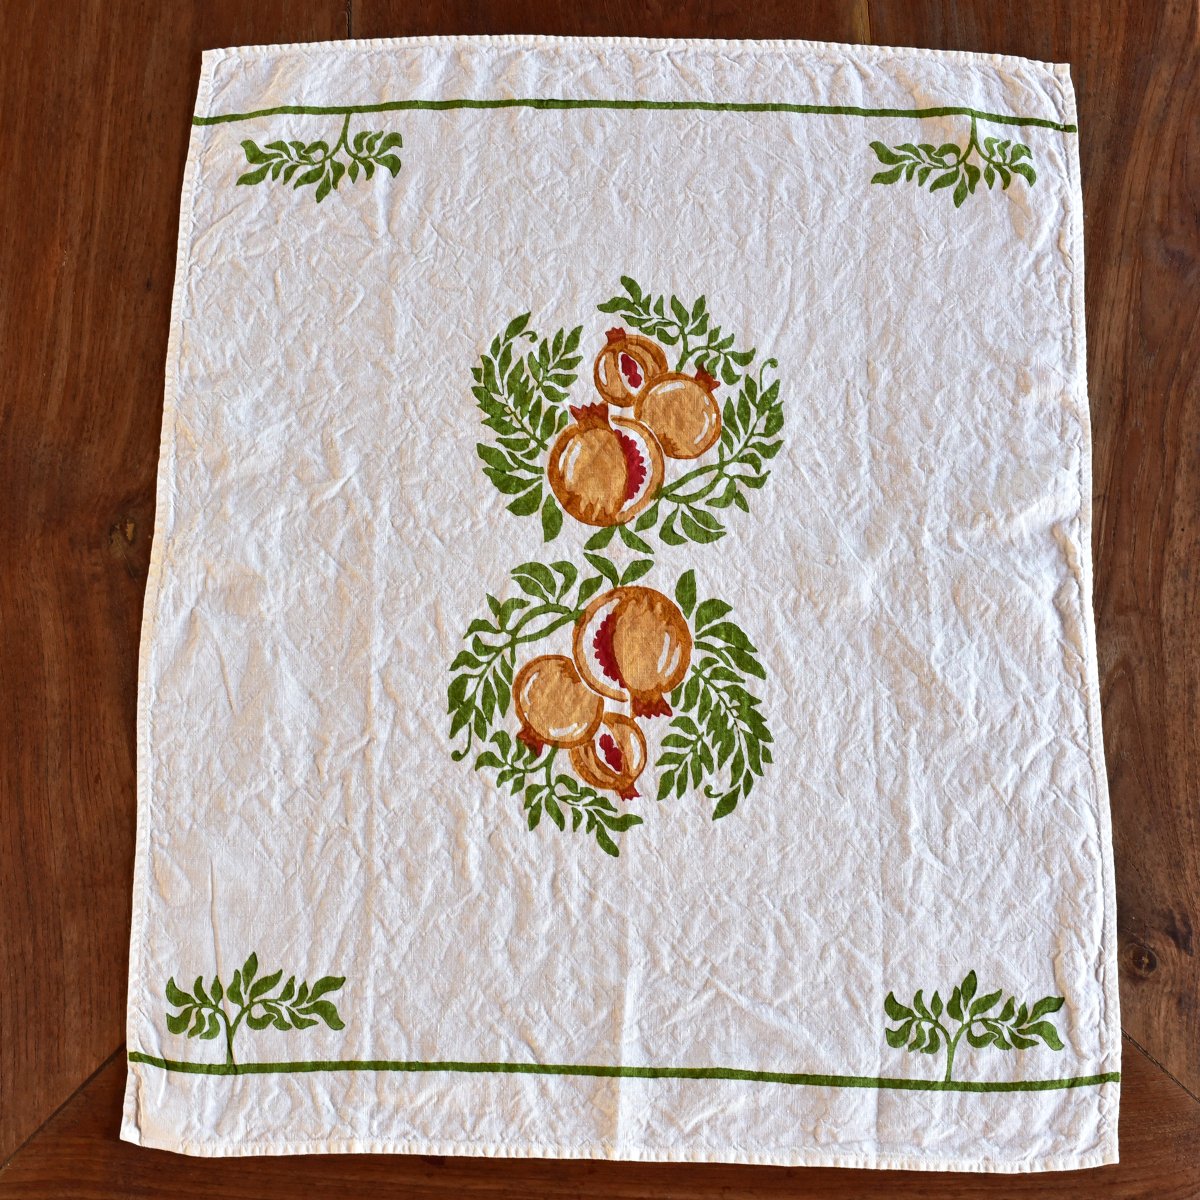 Block printed cloth napkins - Pomegranate Inc.